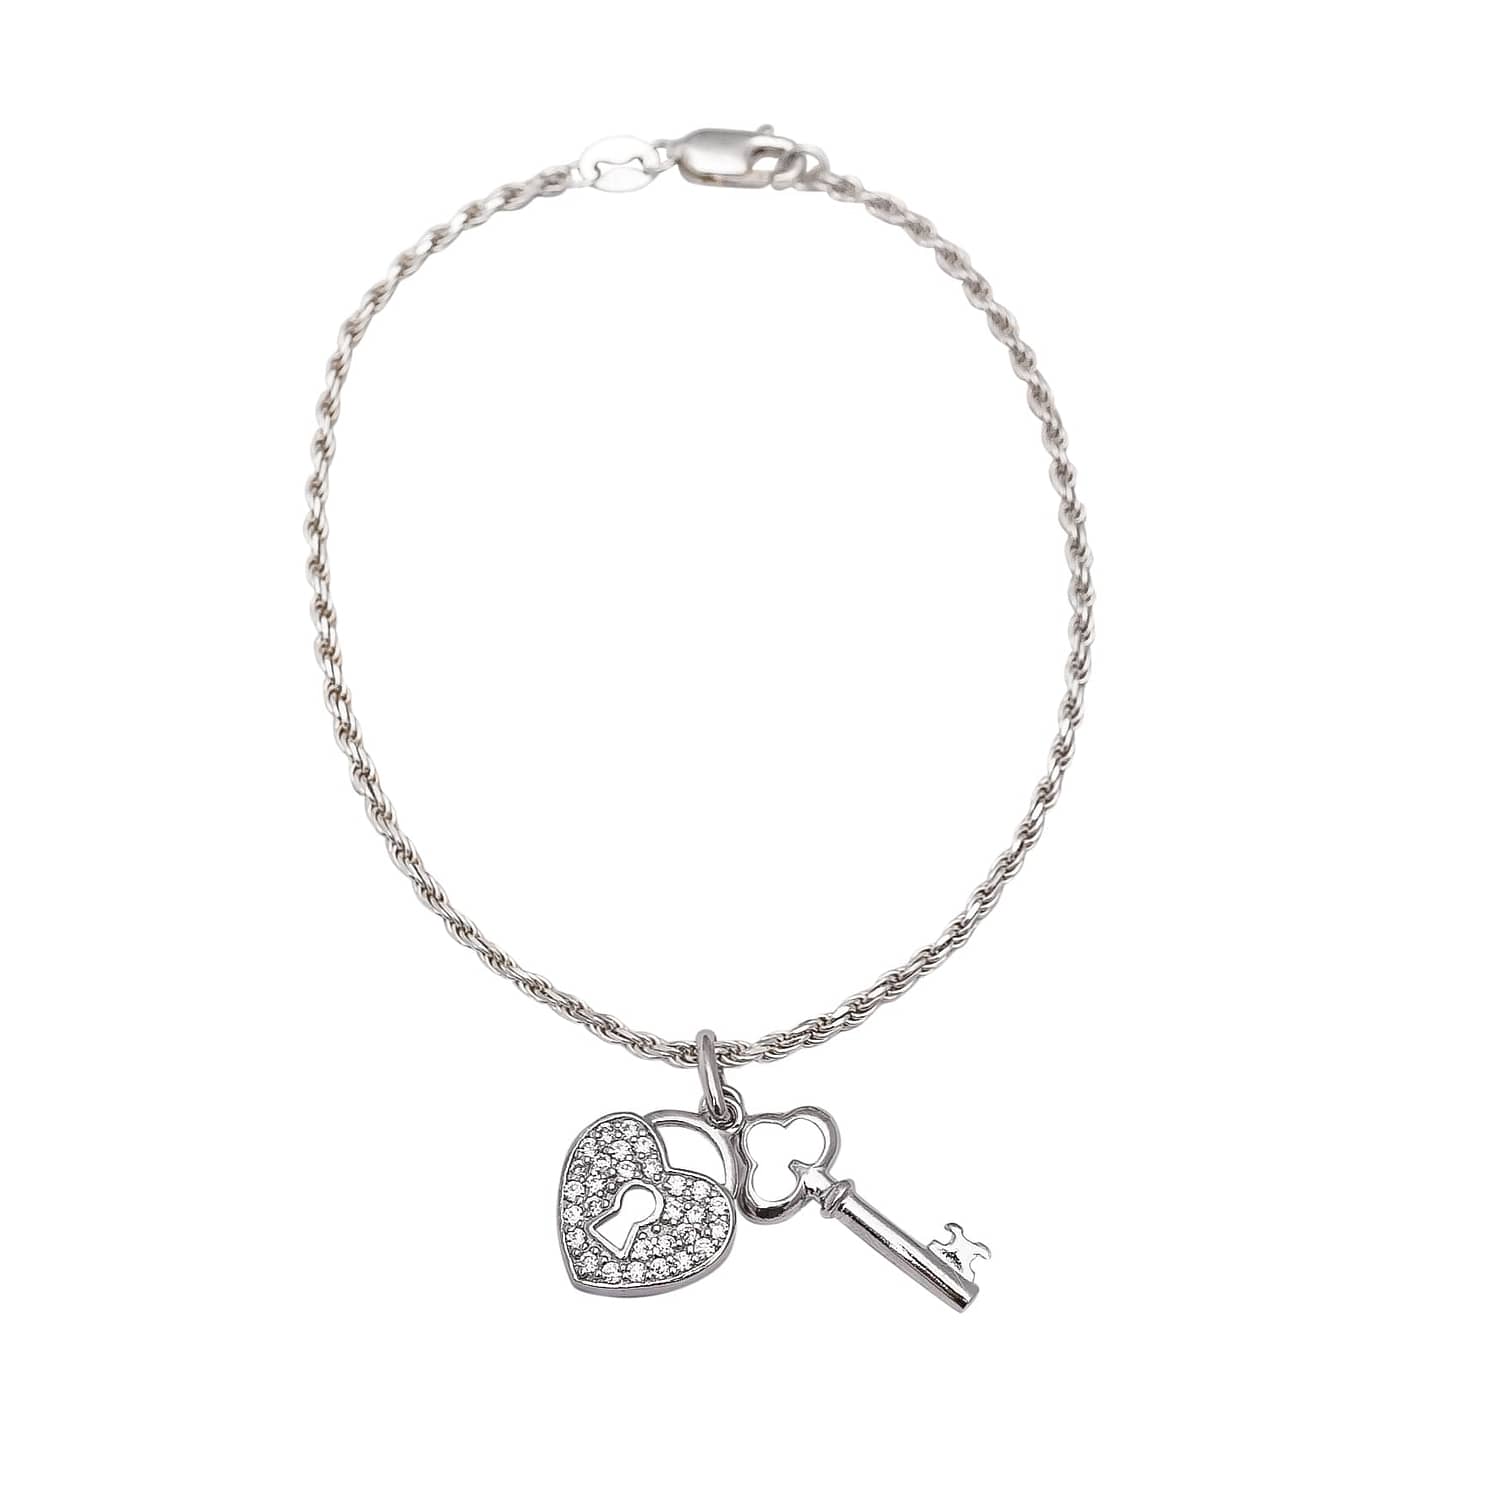 rope bracelet with key and padlock pendant